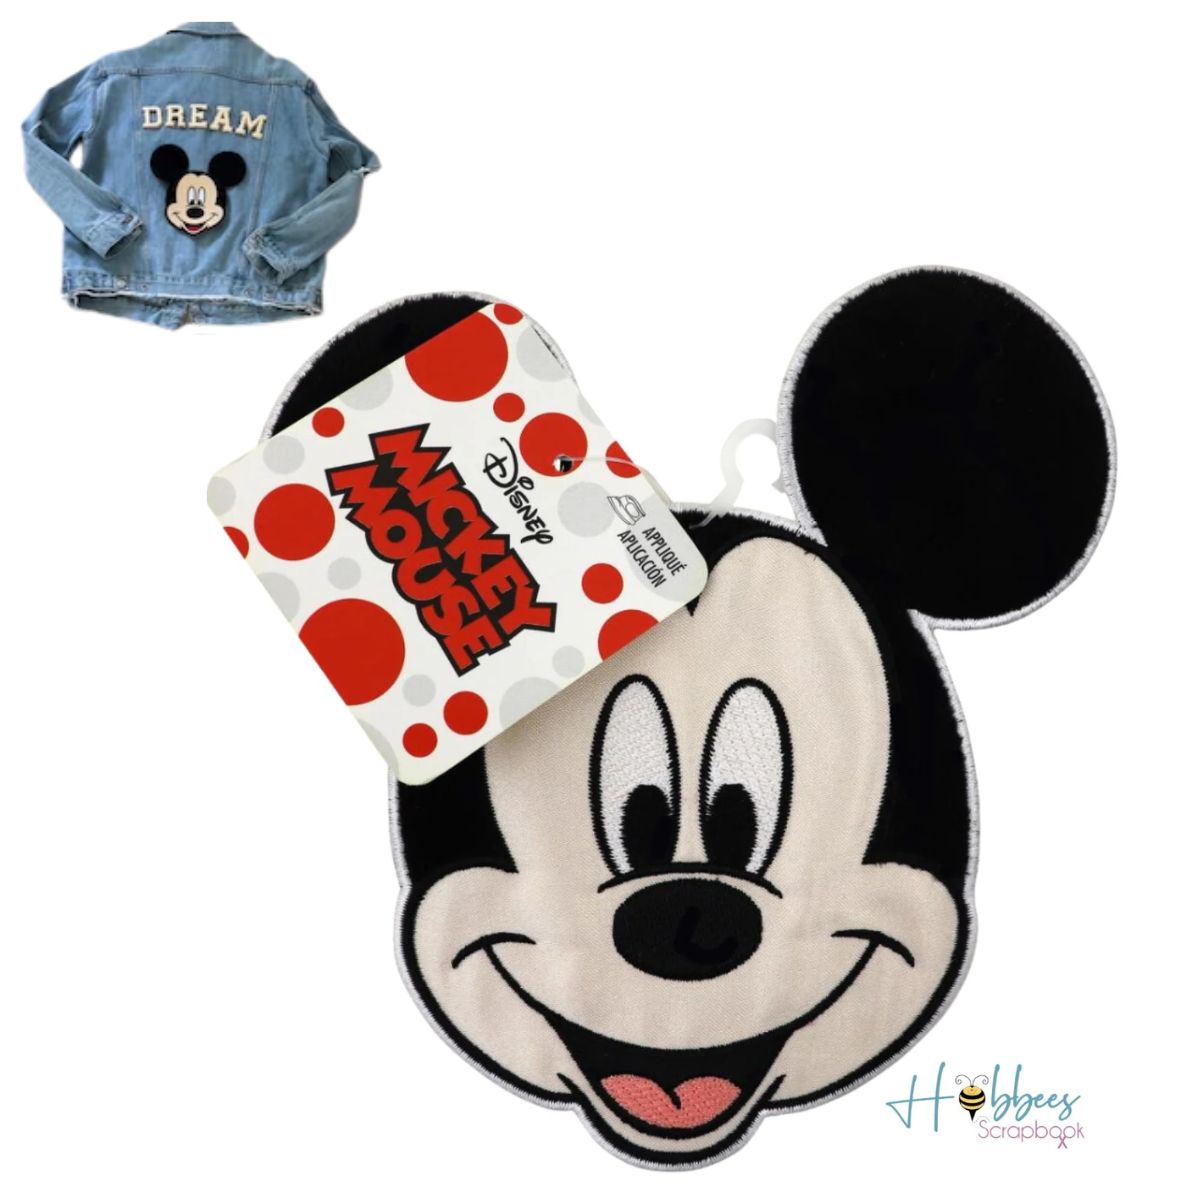 Mickey Mouse Iron-On Applique / Parche Térmico de Mickey Mouse